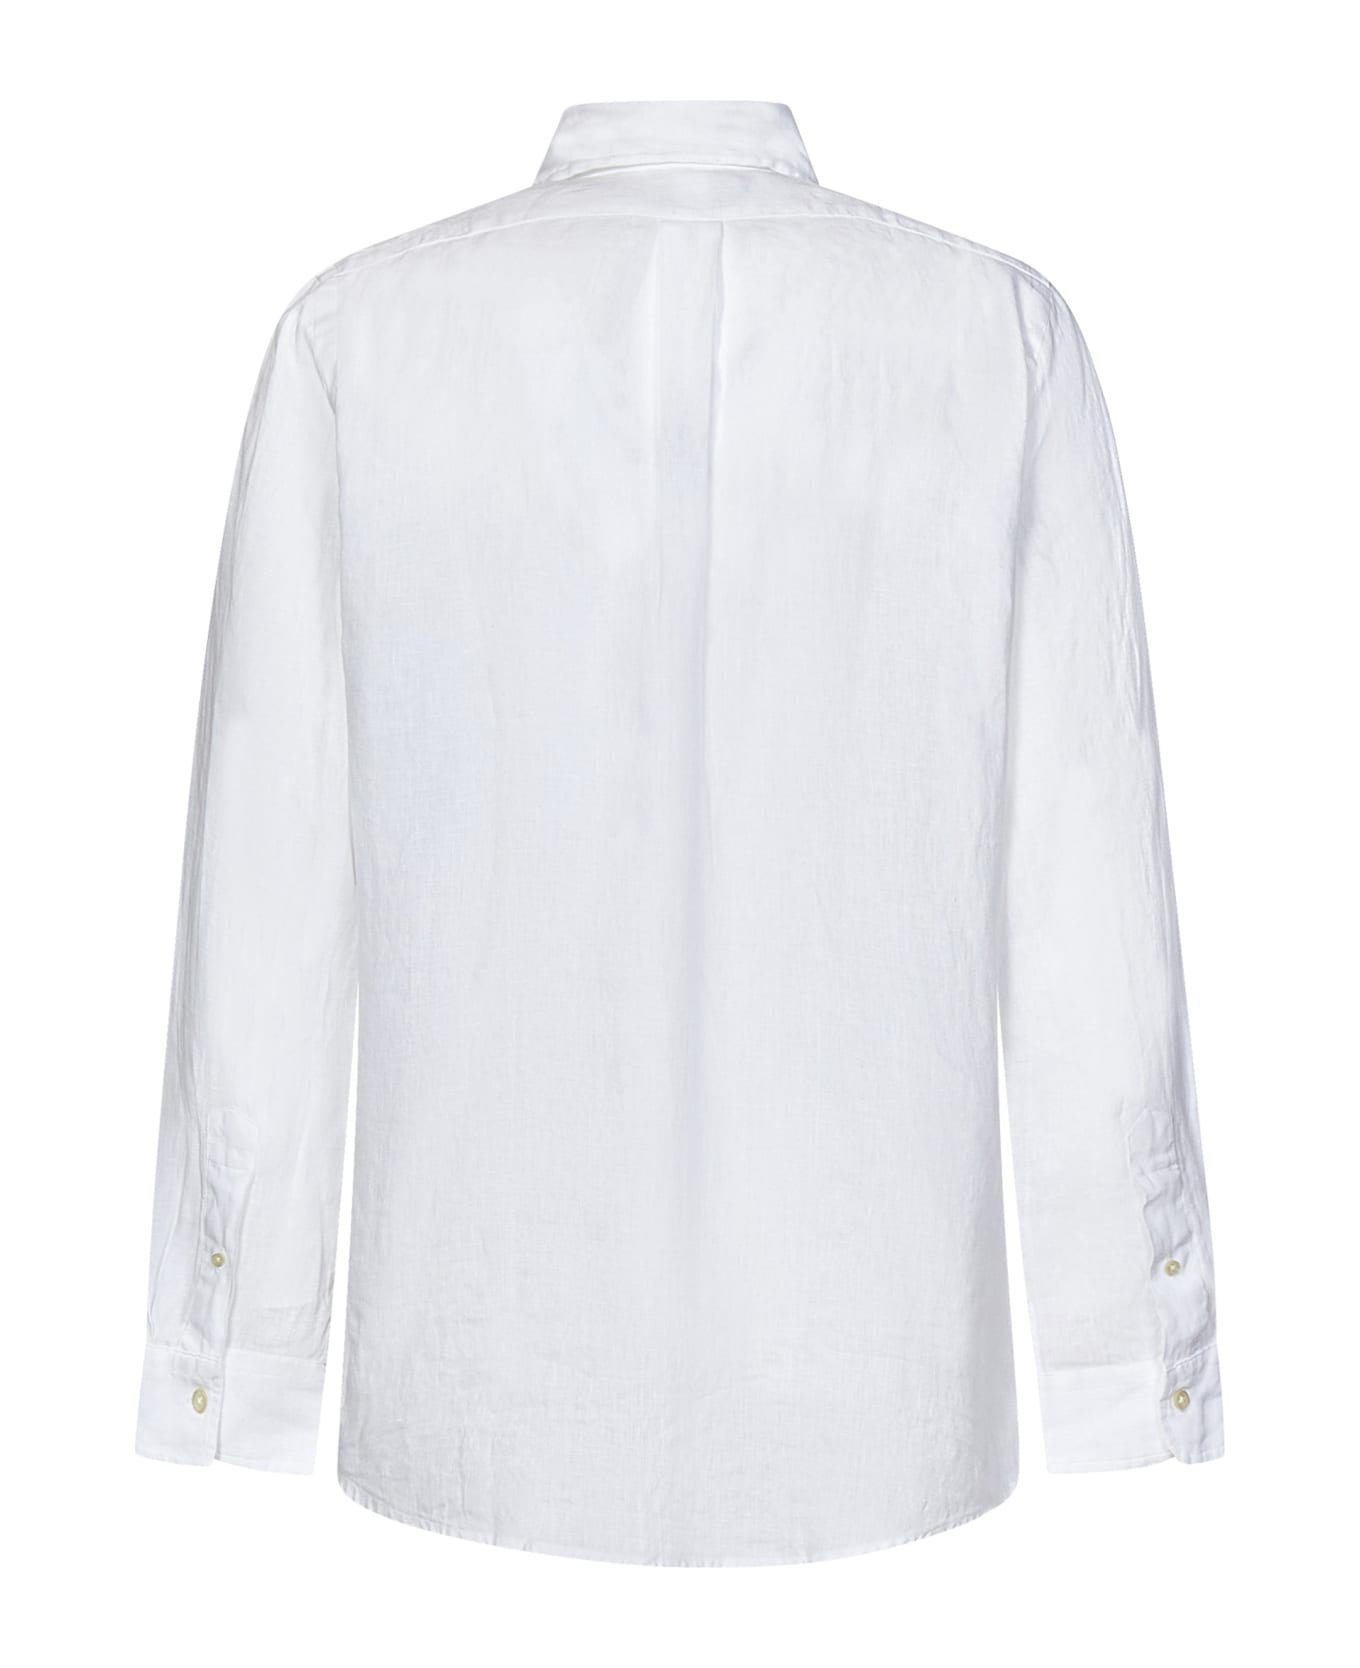 Ralph Lauren Shirt - white シャツ